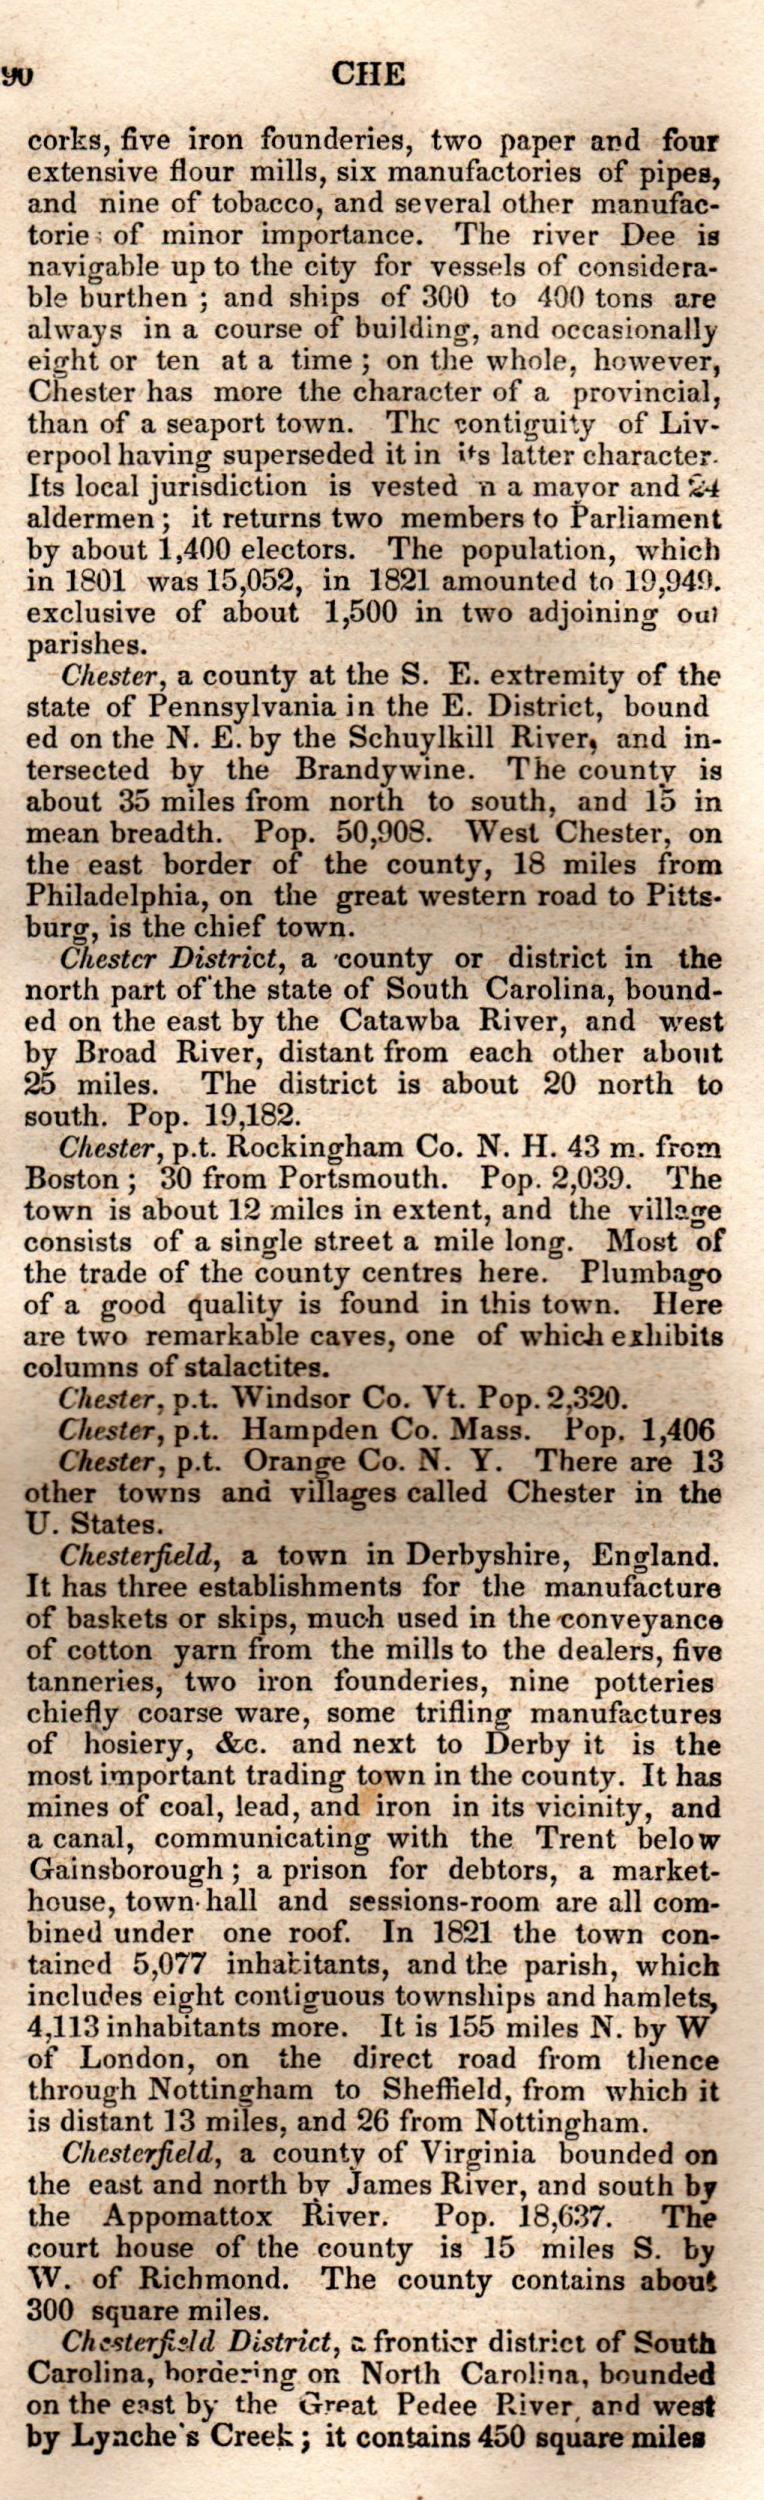 Brookes’ Universal Gazetteer (1850), Page 190 Right Column